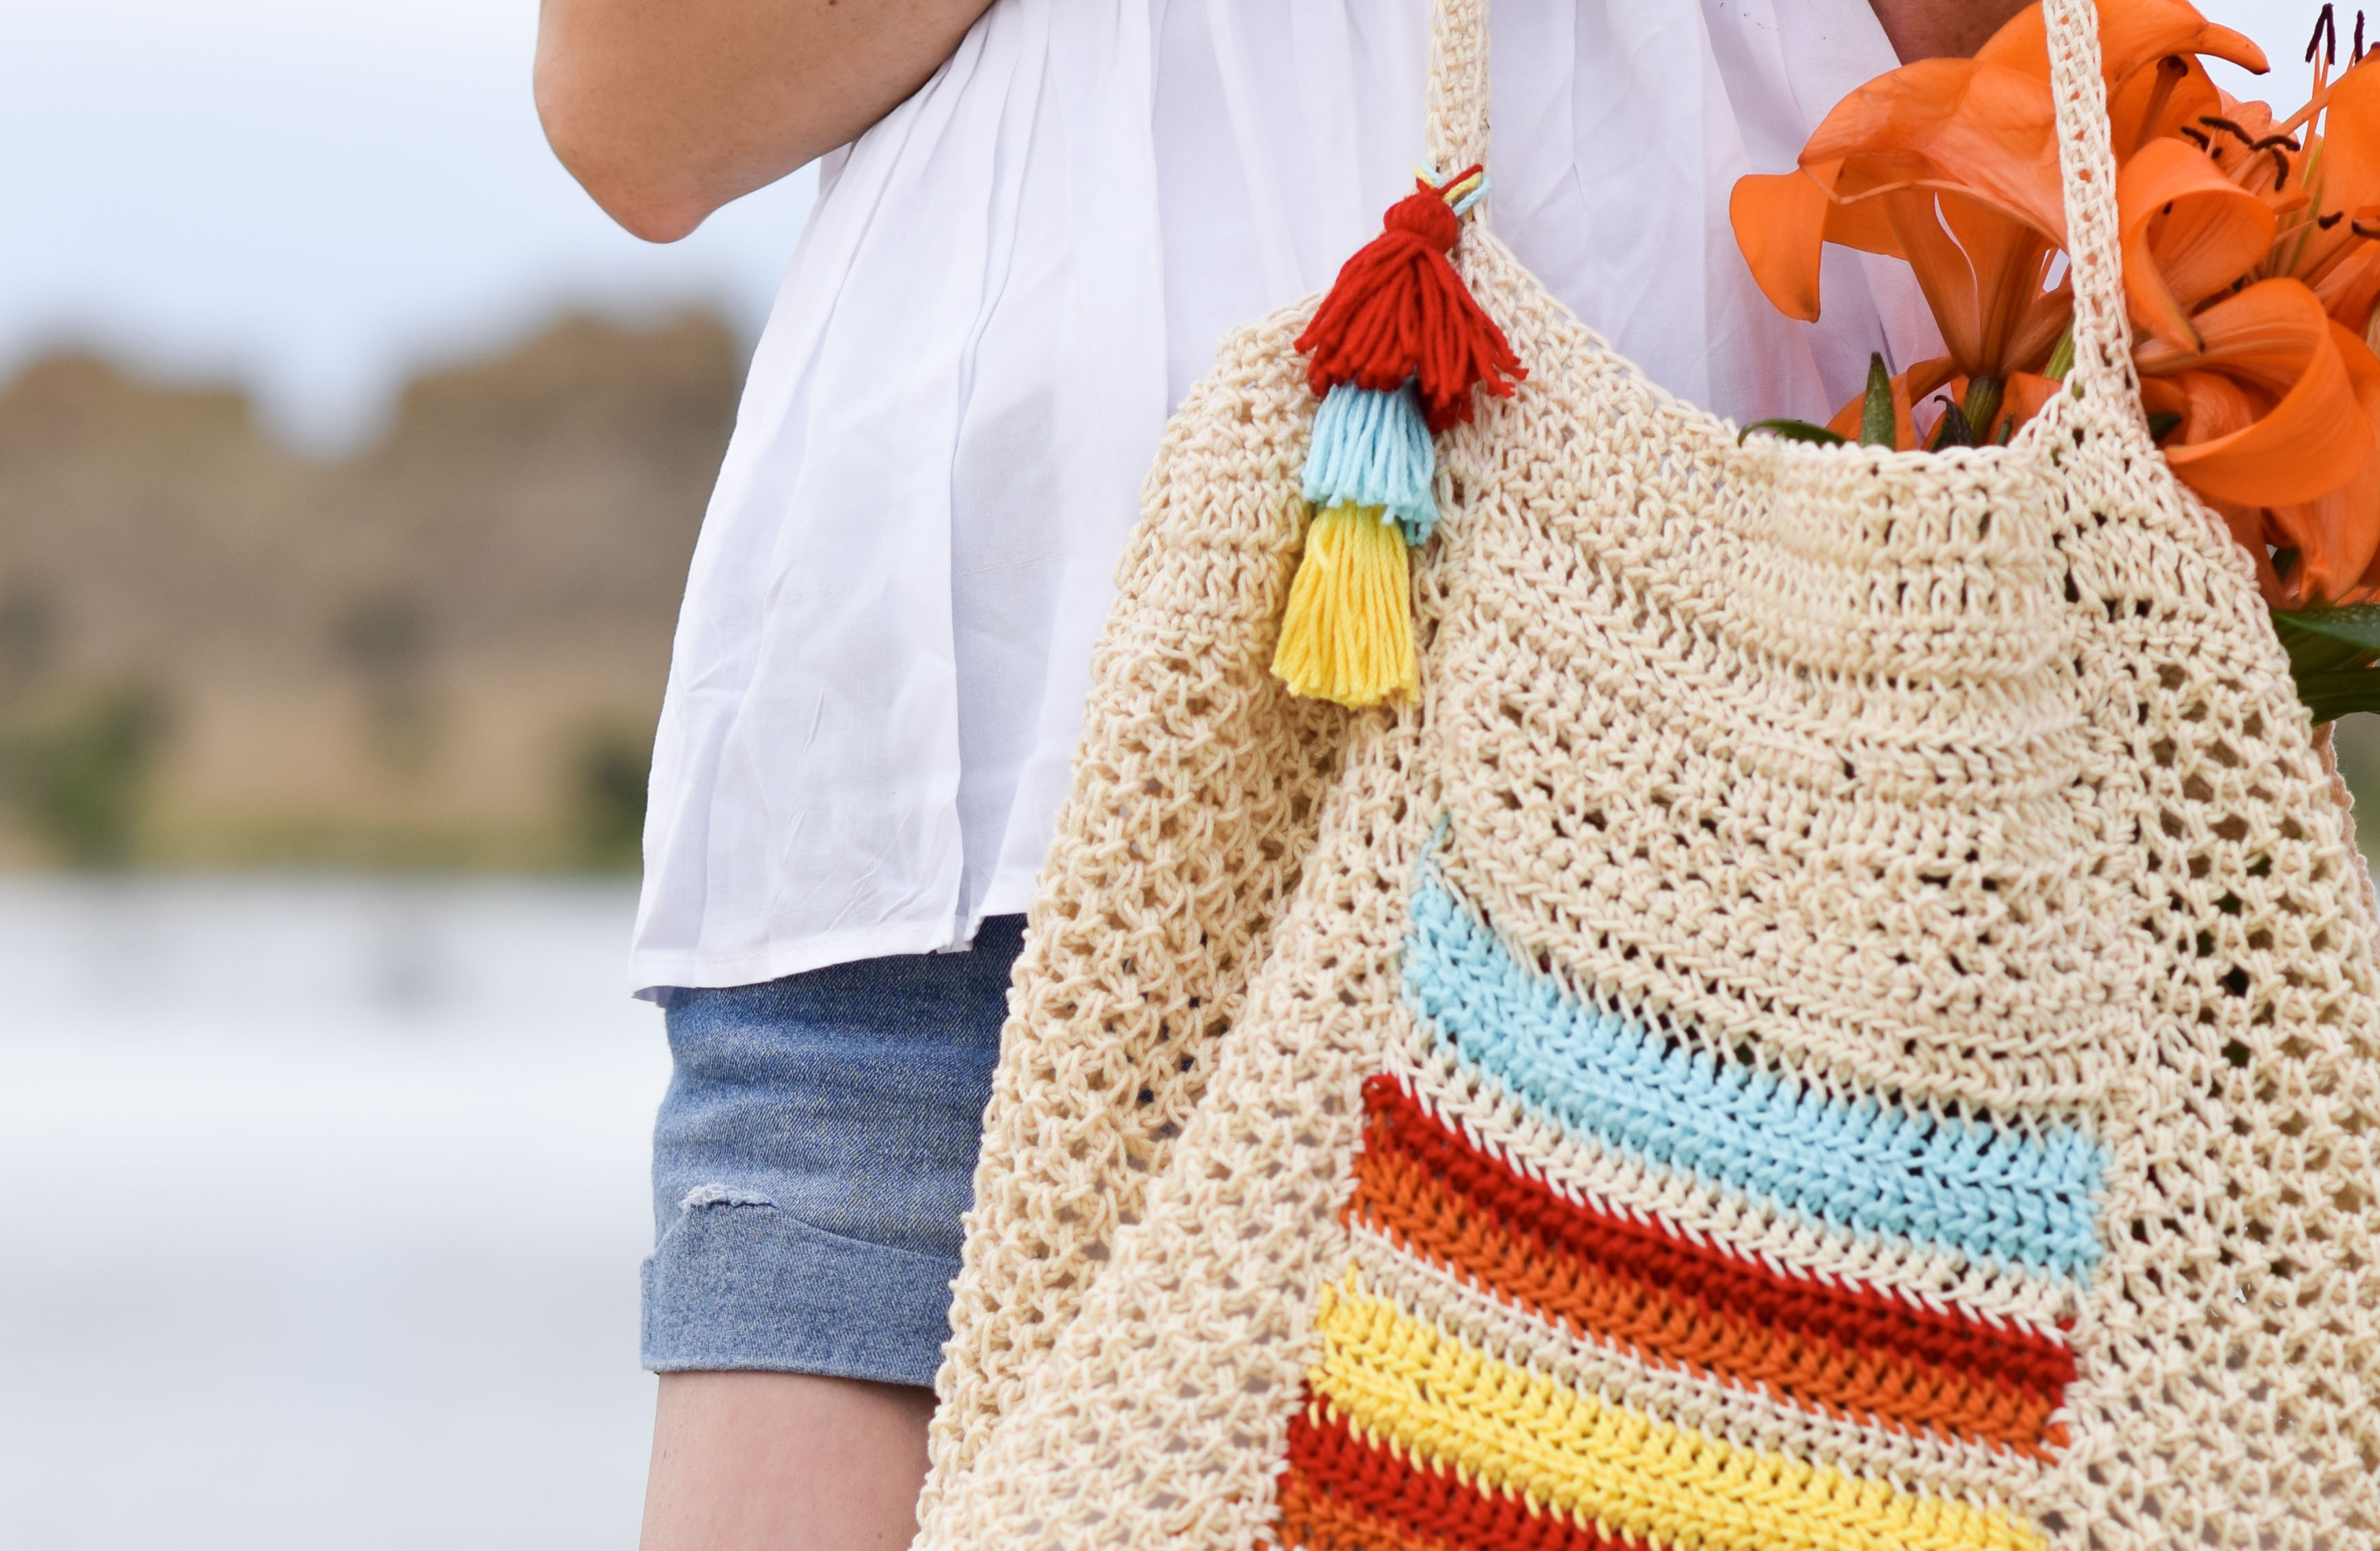 Crochet Bag Leaf Fall Medium Zippered Project Bag Knitting Bag Sock Bag Makeup or Craft Bag with Inside Pocket Yarn